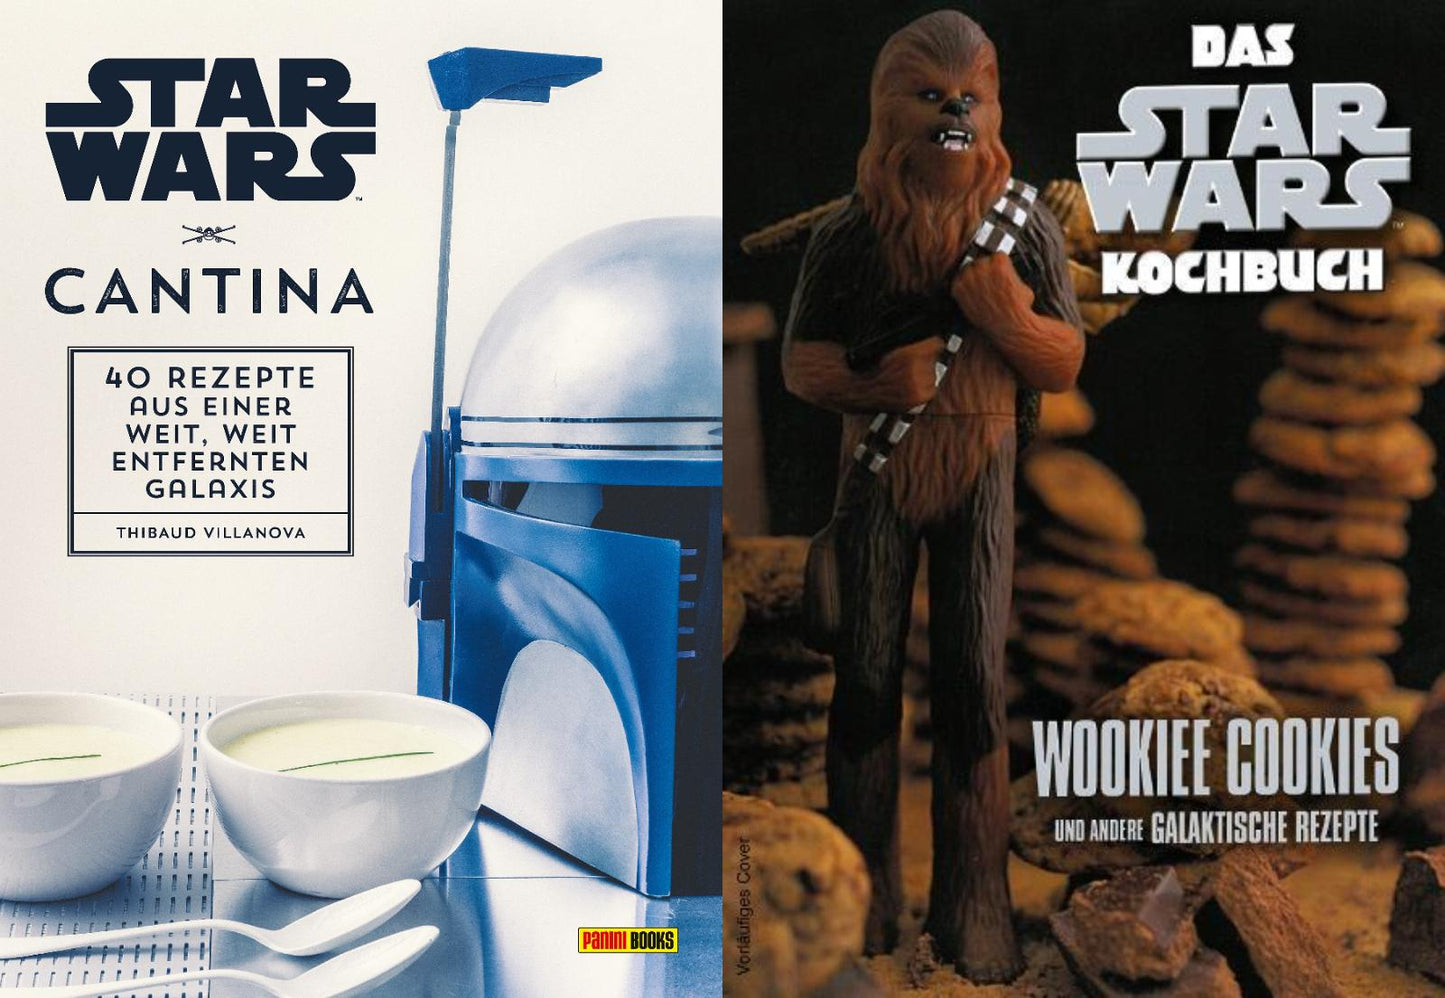 Star Wars Cantina & Wookiee Cookies im Set + 1 exklusives Postkartenset